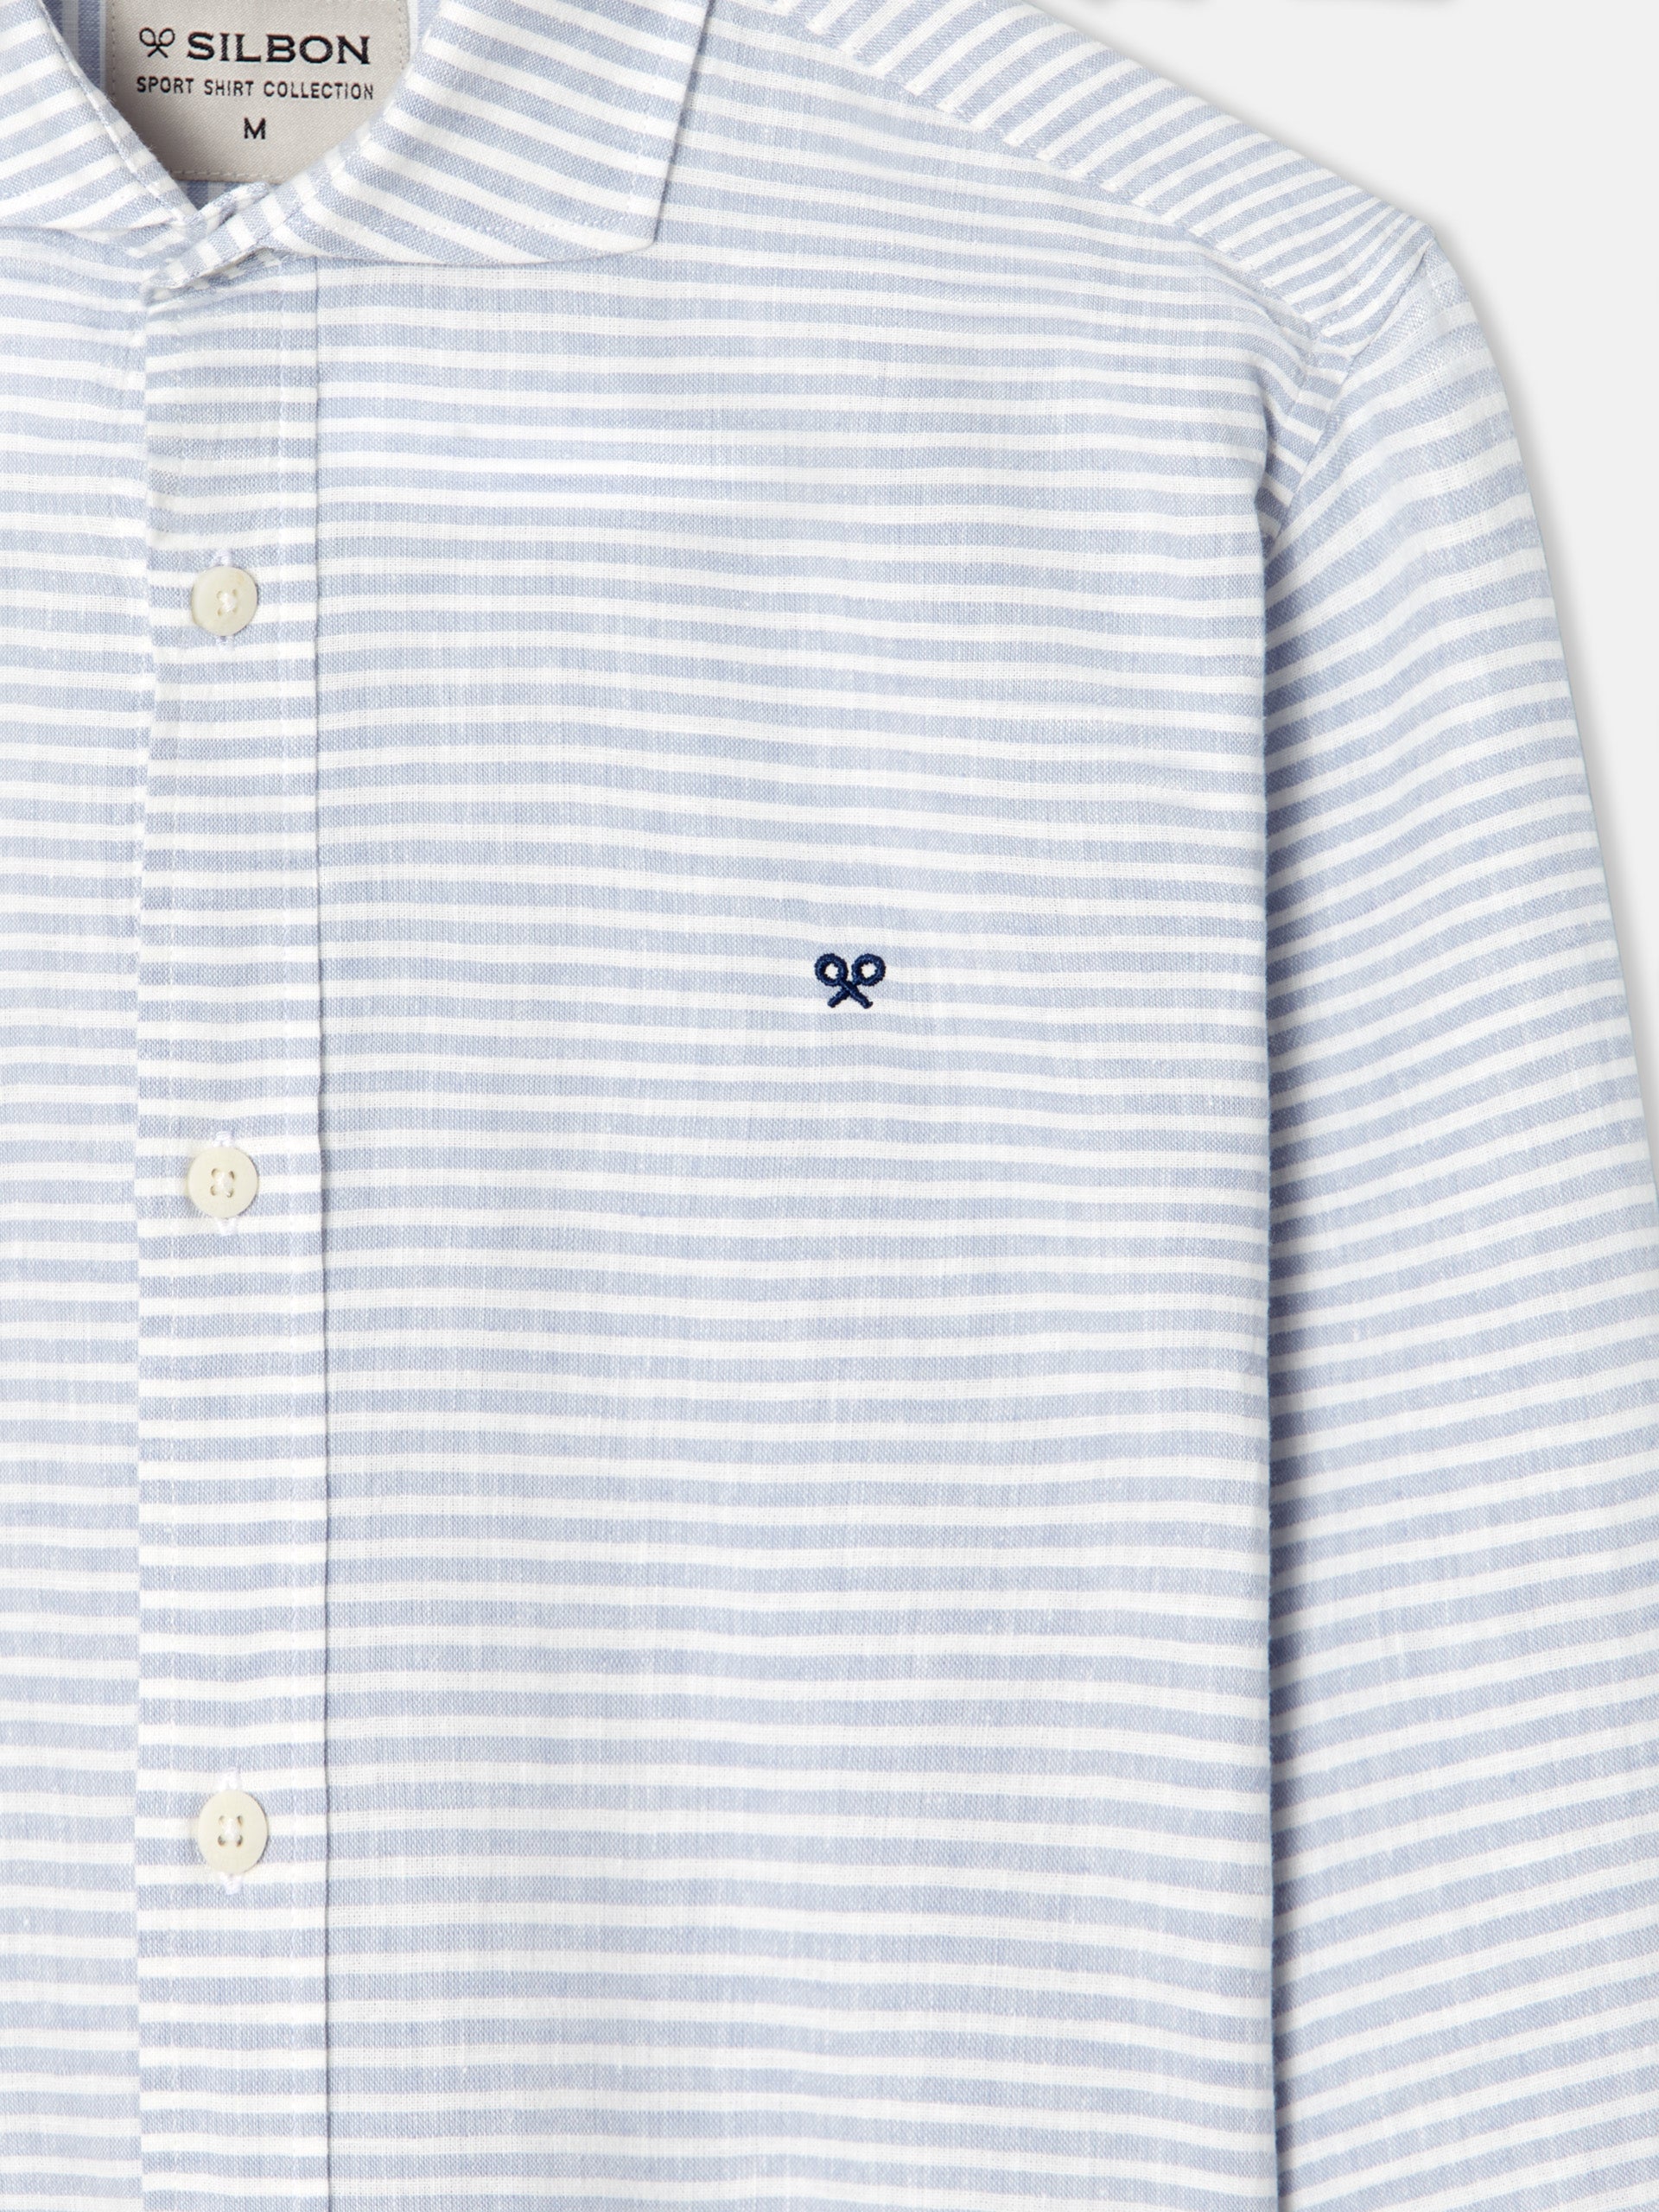 Camisa sport silbon soft raya horizontal azul